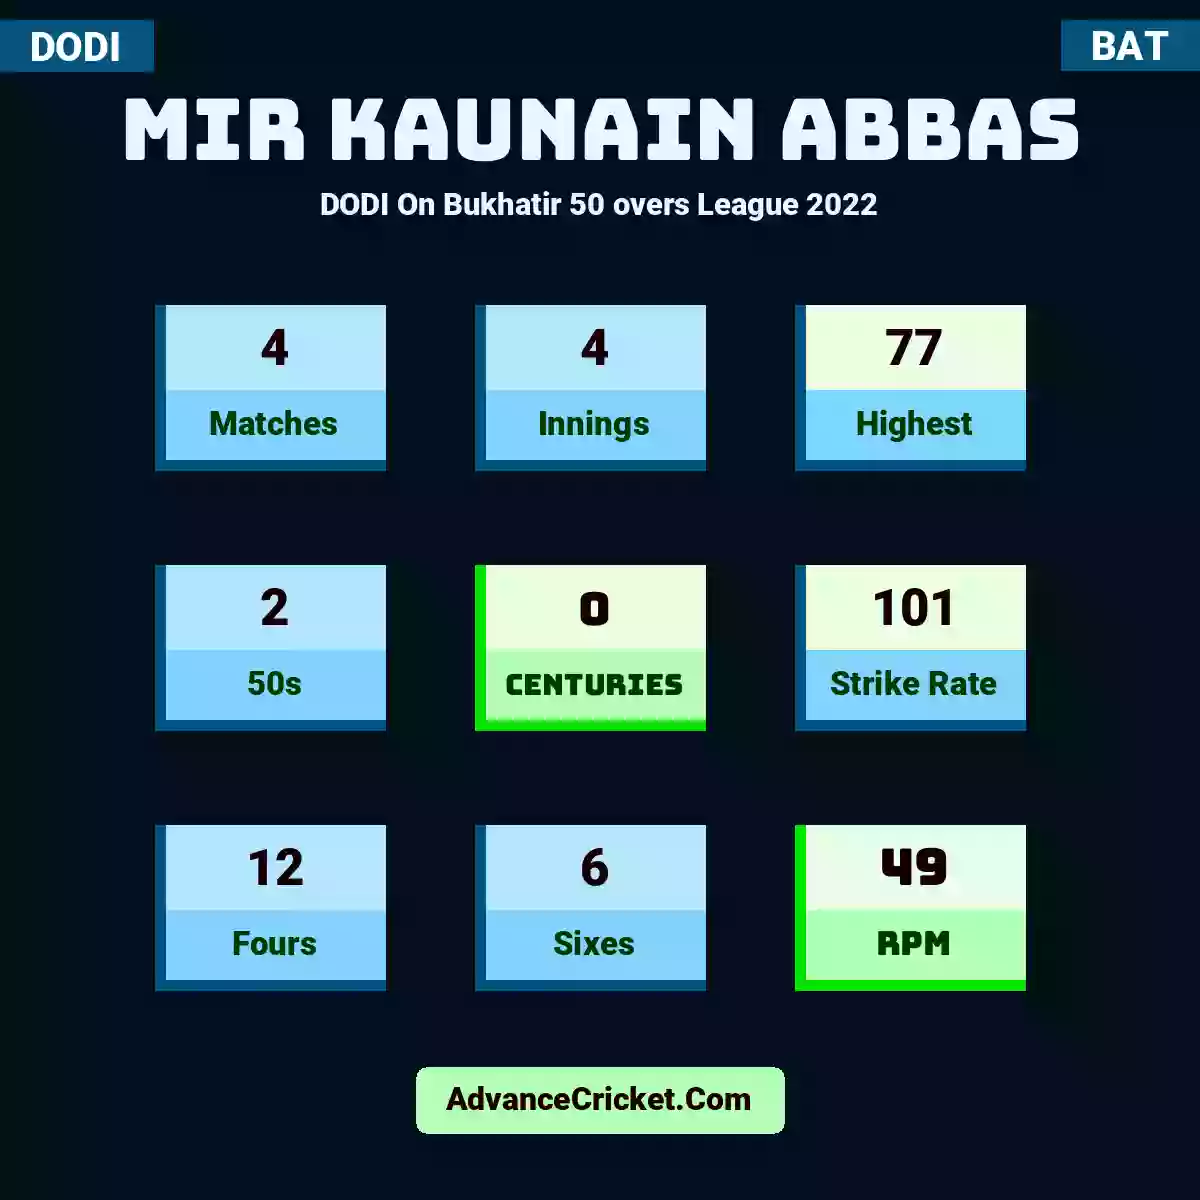 Mir Kaunain Abbas DODI  On Bukhatir 50 overs League 2022, Mir Kaunain Abbas played 4 matches, scored 77 runs as highest, 2 half-centuries, and 0 centuries, with a strike rate of 101. M.Abbas hit 12 fours and 6 sixes, with an RPM of 49.